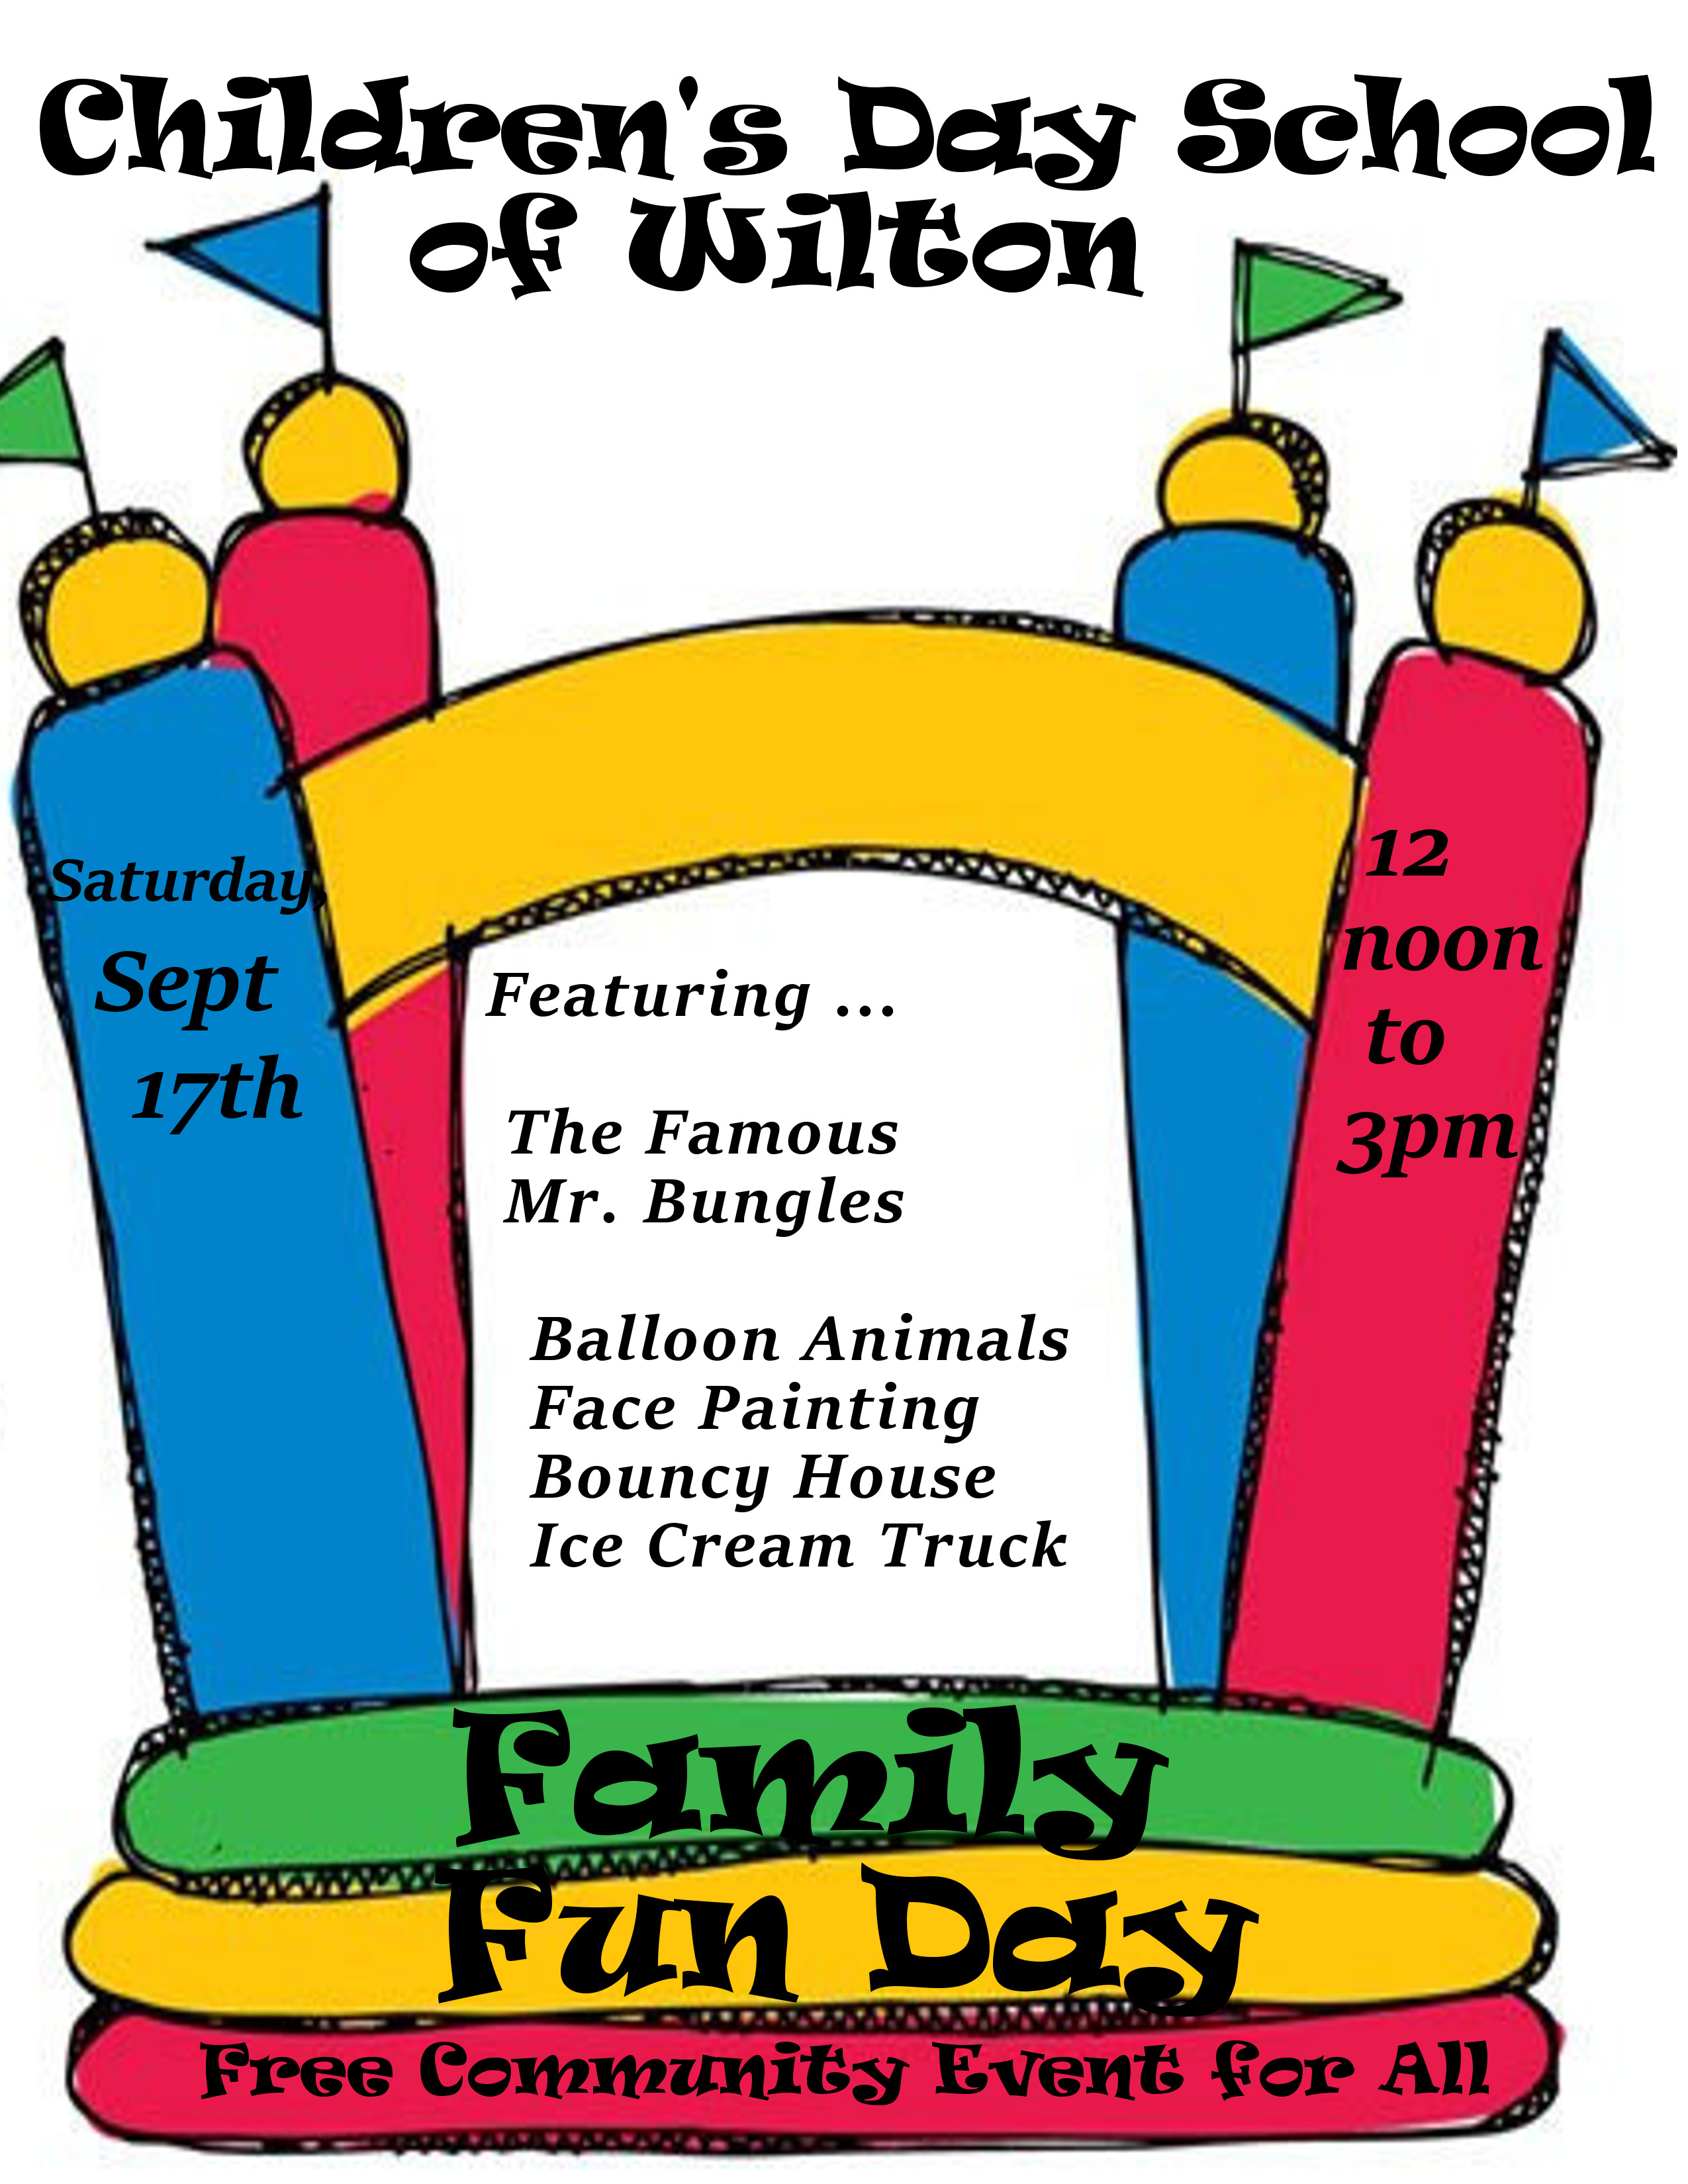 Family Fun Day | Children's Day School of Wilton